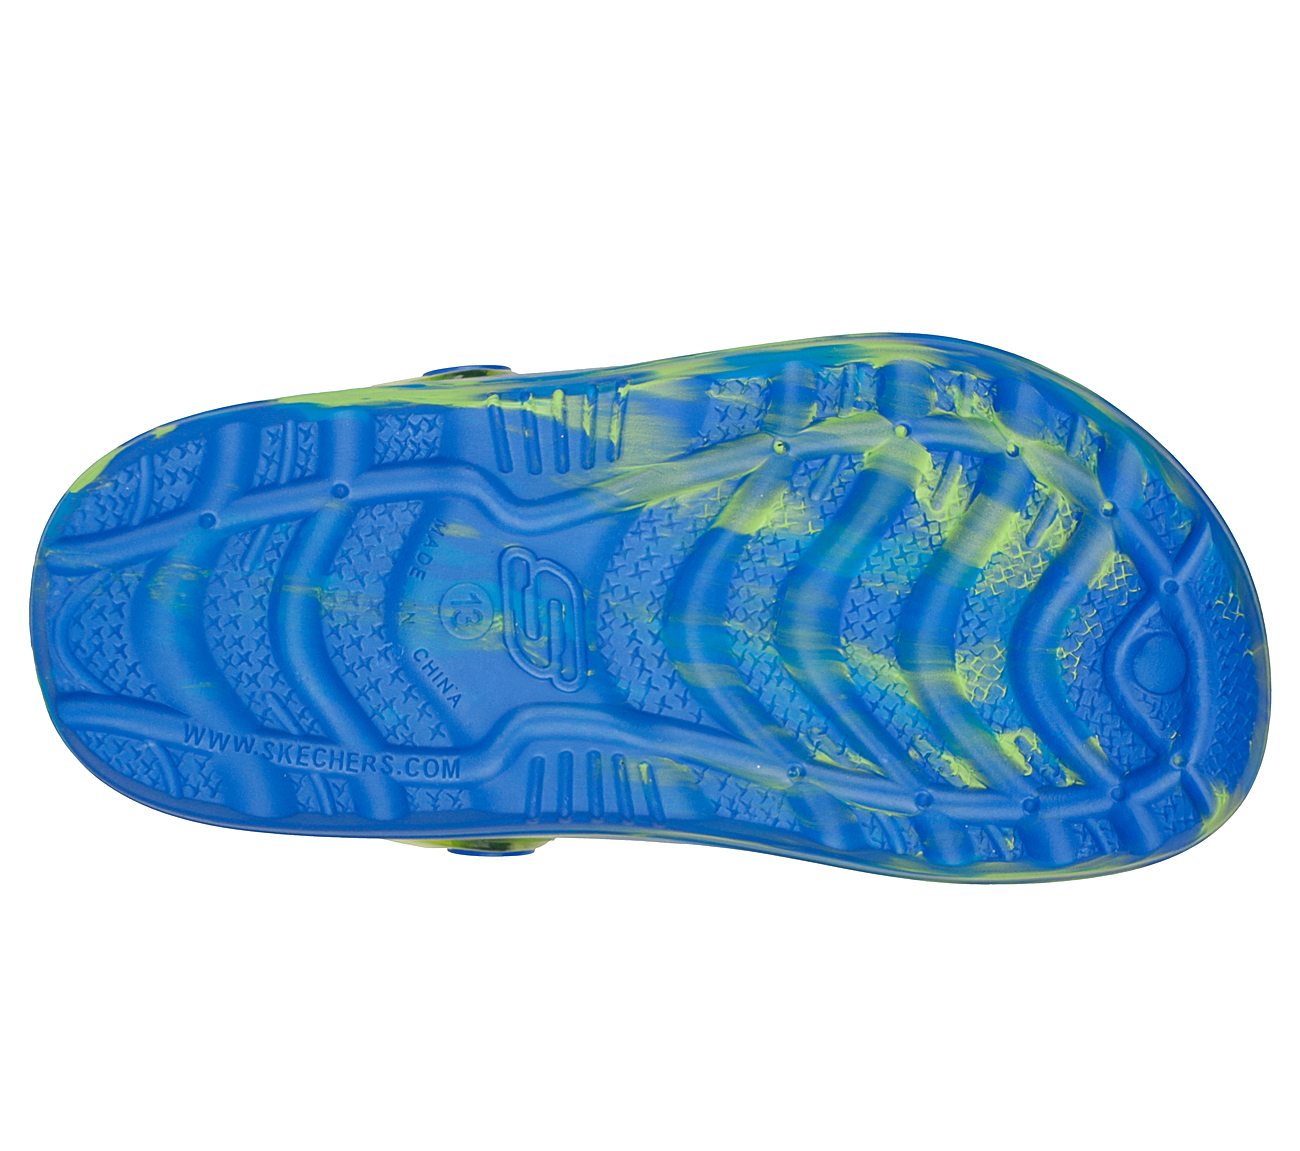 SWIFTERS-TRANSLUMINATOR, BLUE/LIME Footwear Bottom View